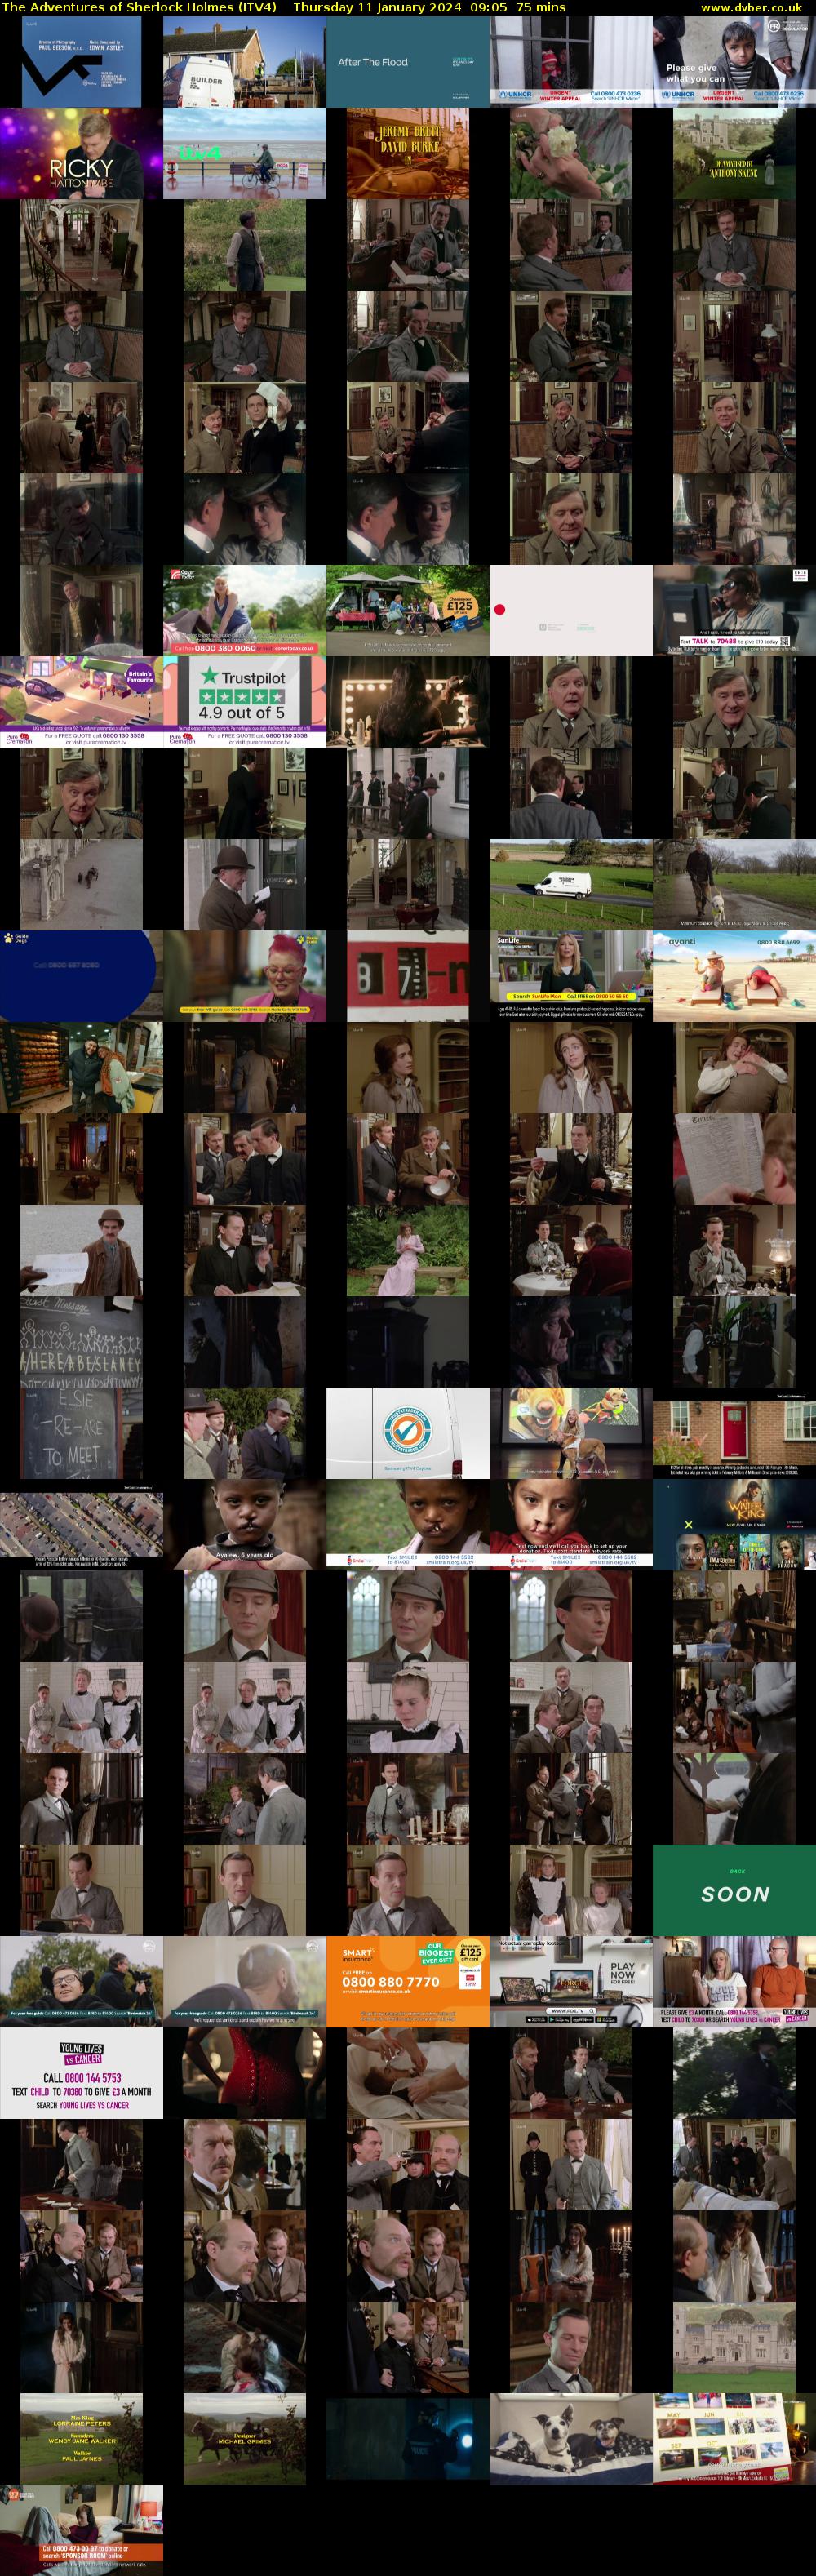 The Adventures of Sherlock Holmes (ITV4) Thursday 11 January 2024 09:05 - 10:20